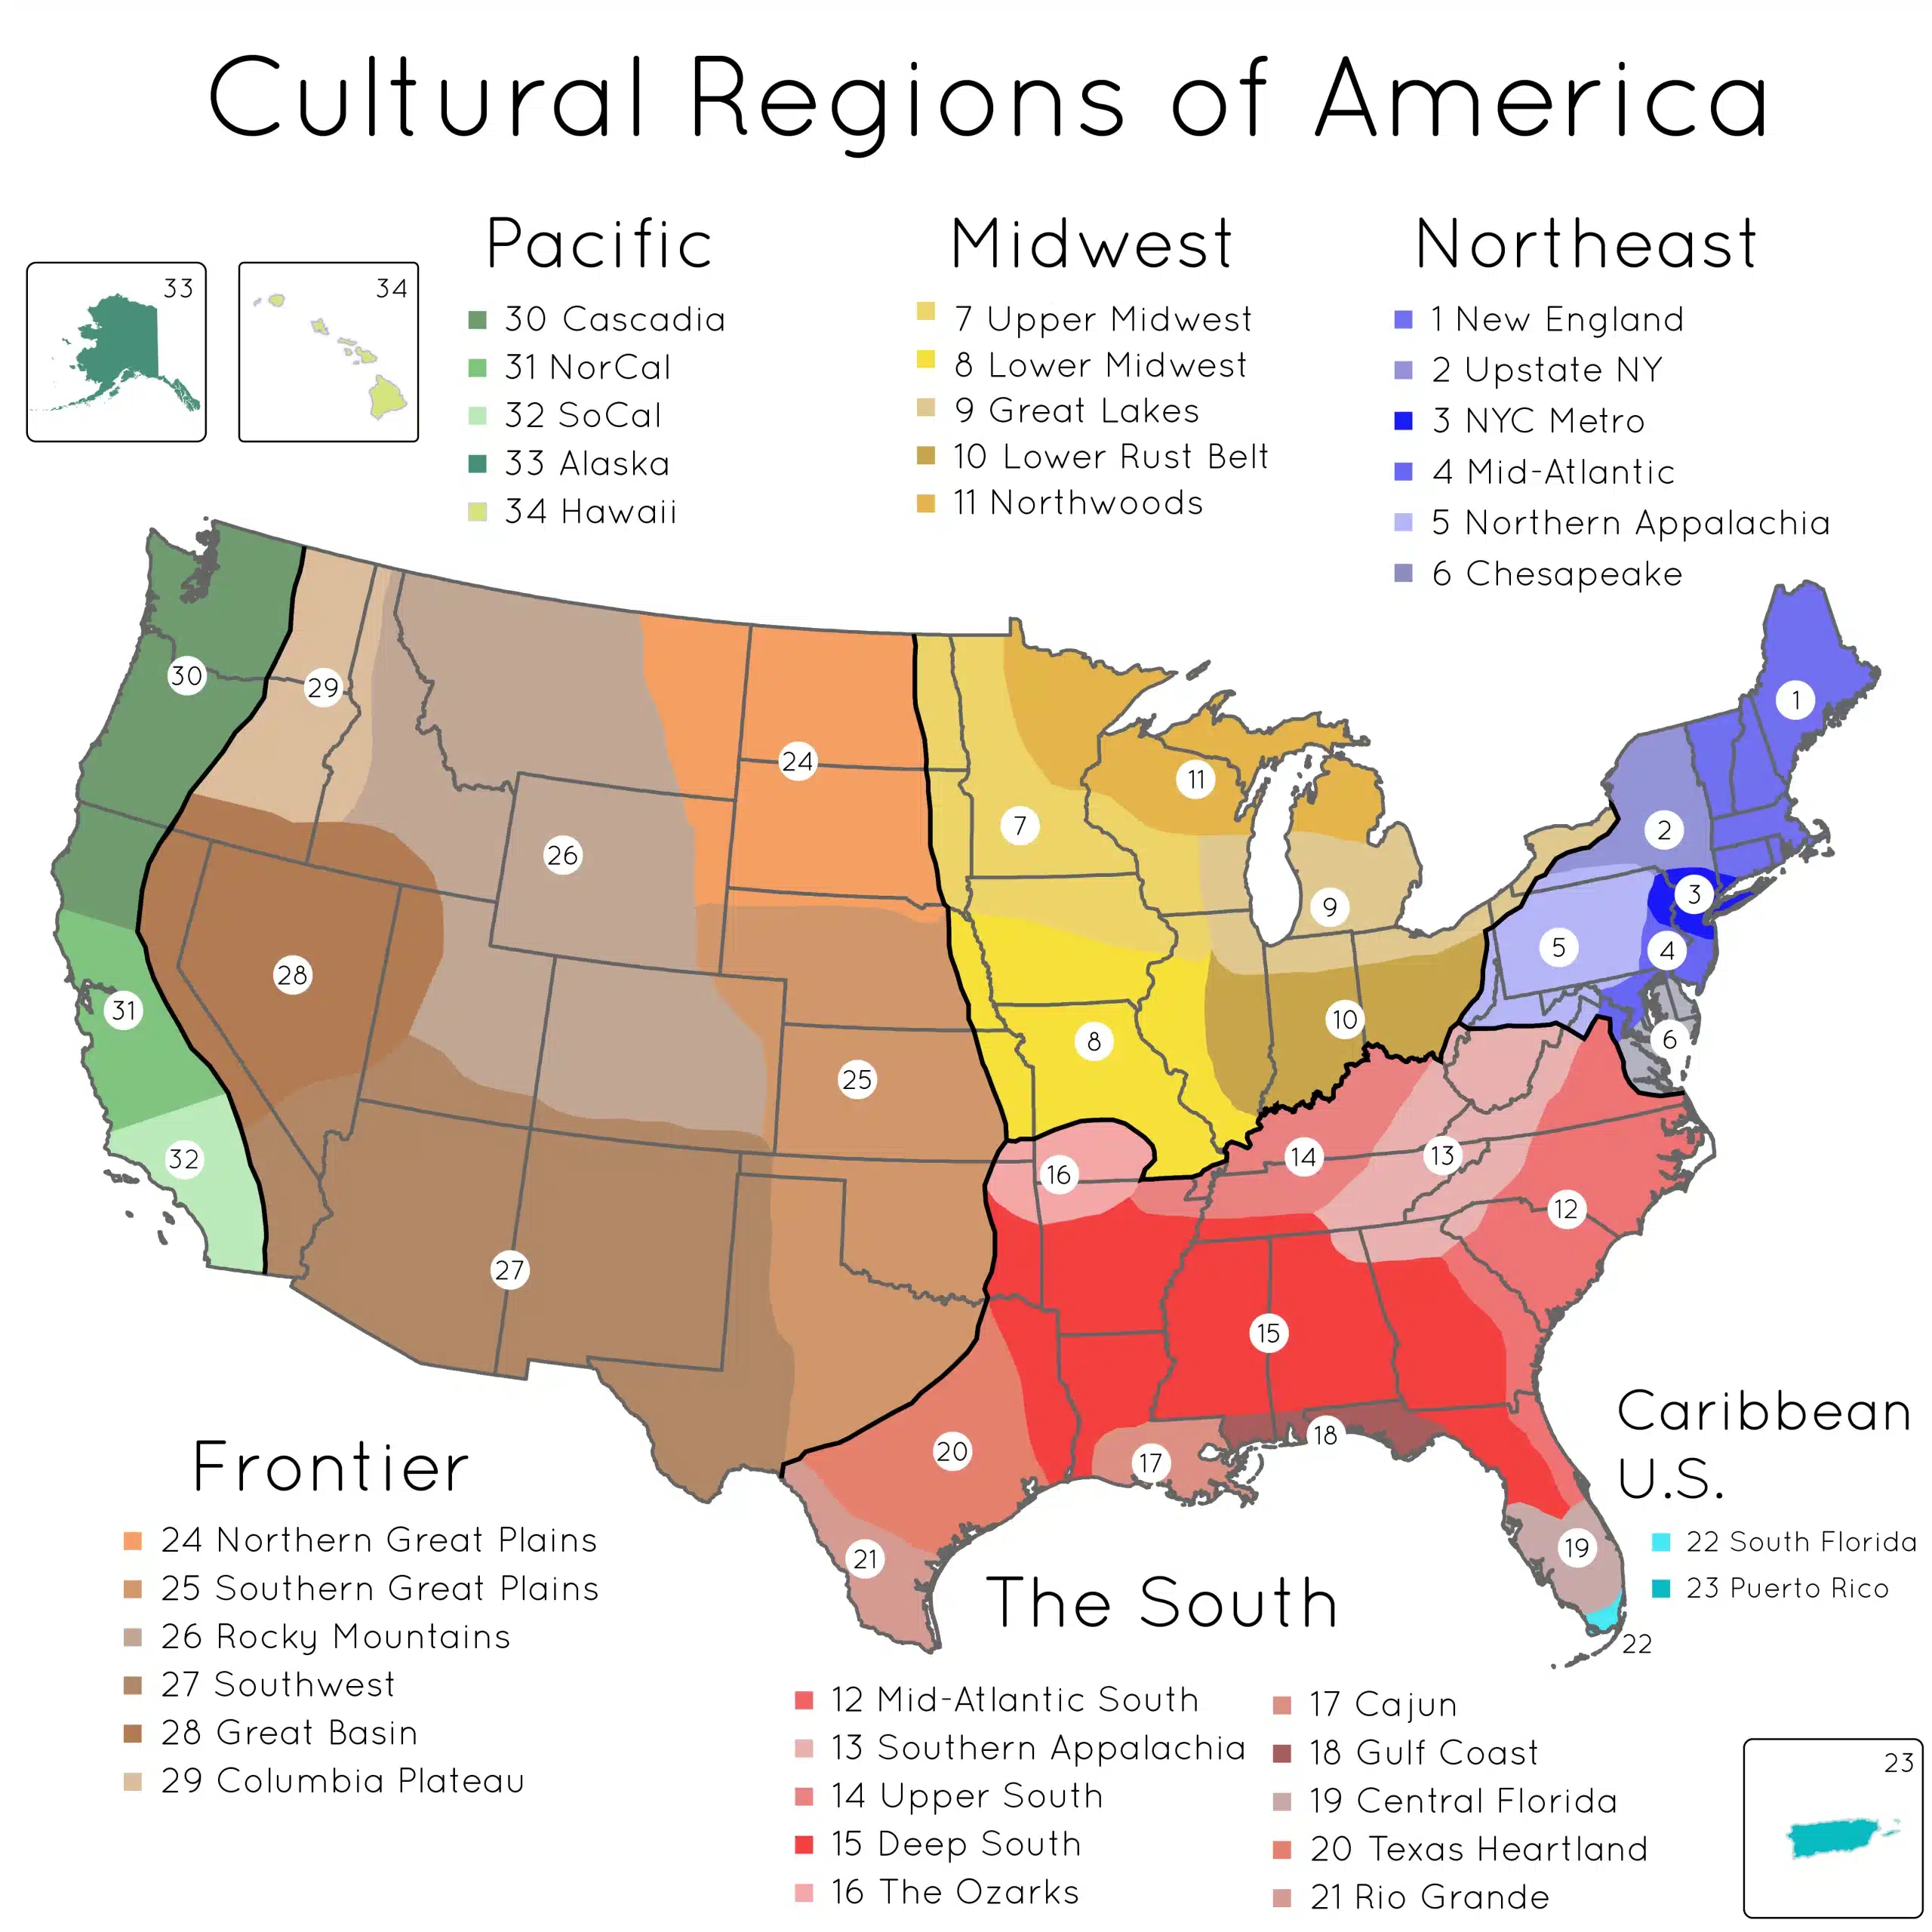 Cultural Regions of the U.S